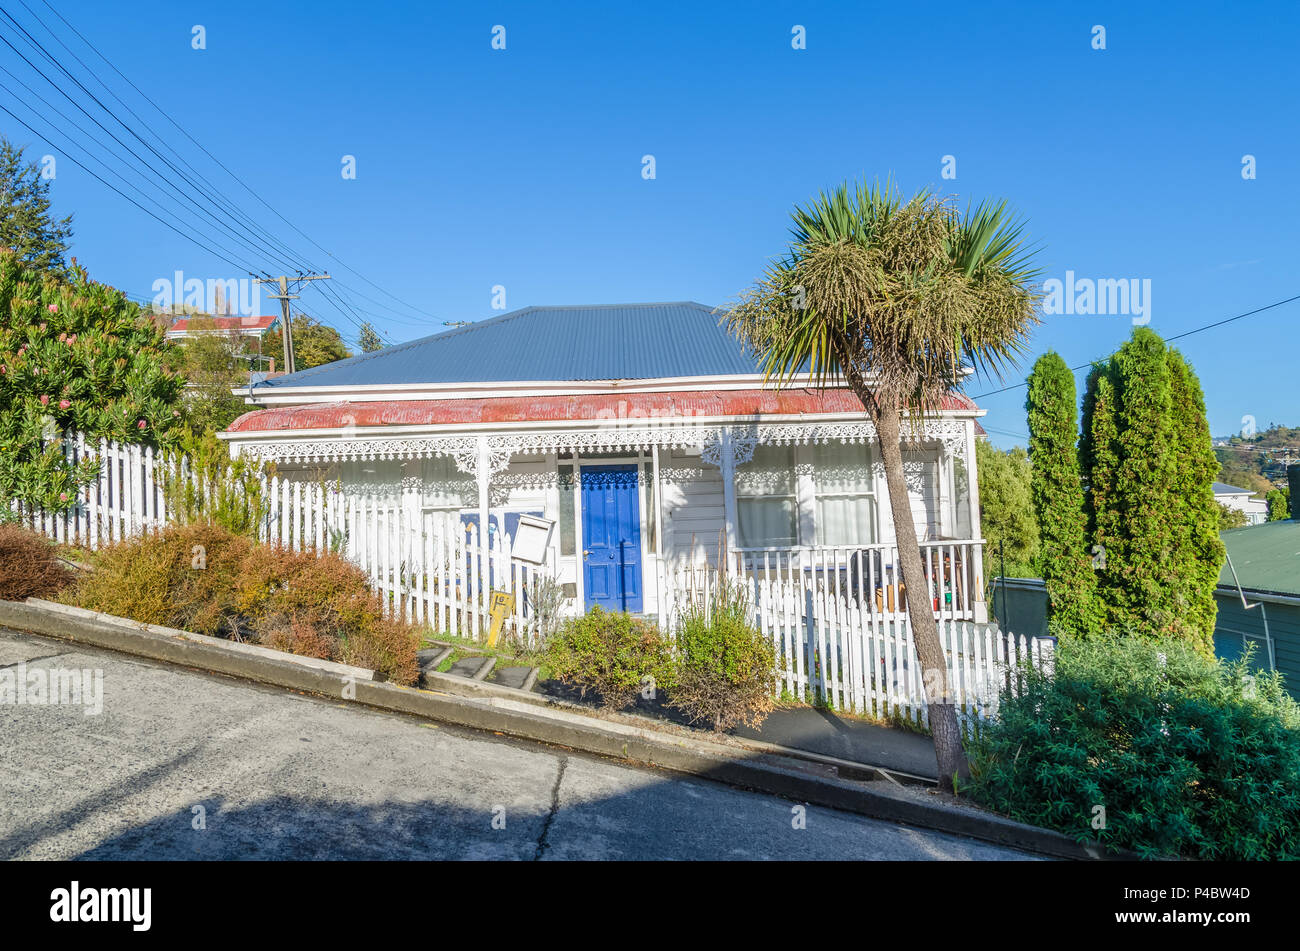 Dunedin,New Zealand - May 5, 2016 : Housing in the Baldwin Street which is located in Dunedin,New Zealand.It is the world steepest street in the world. Stock Photo